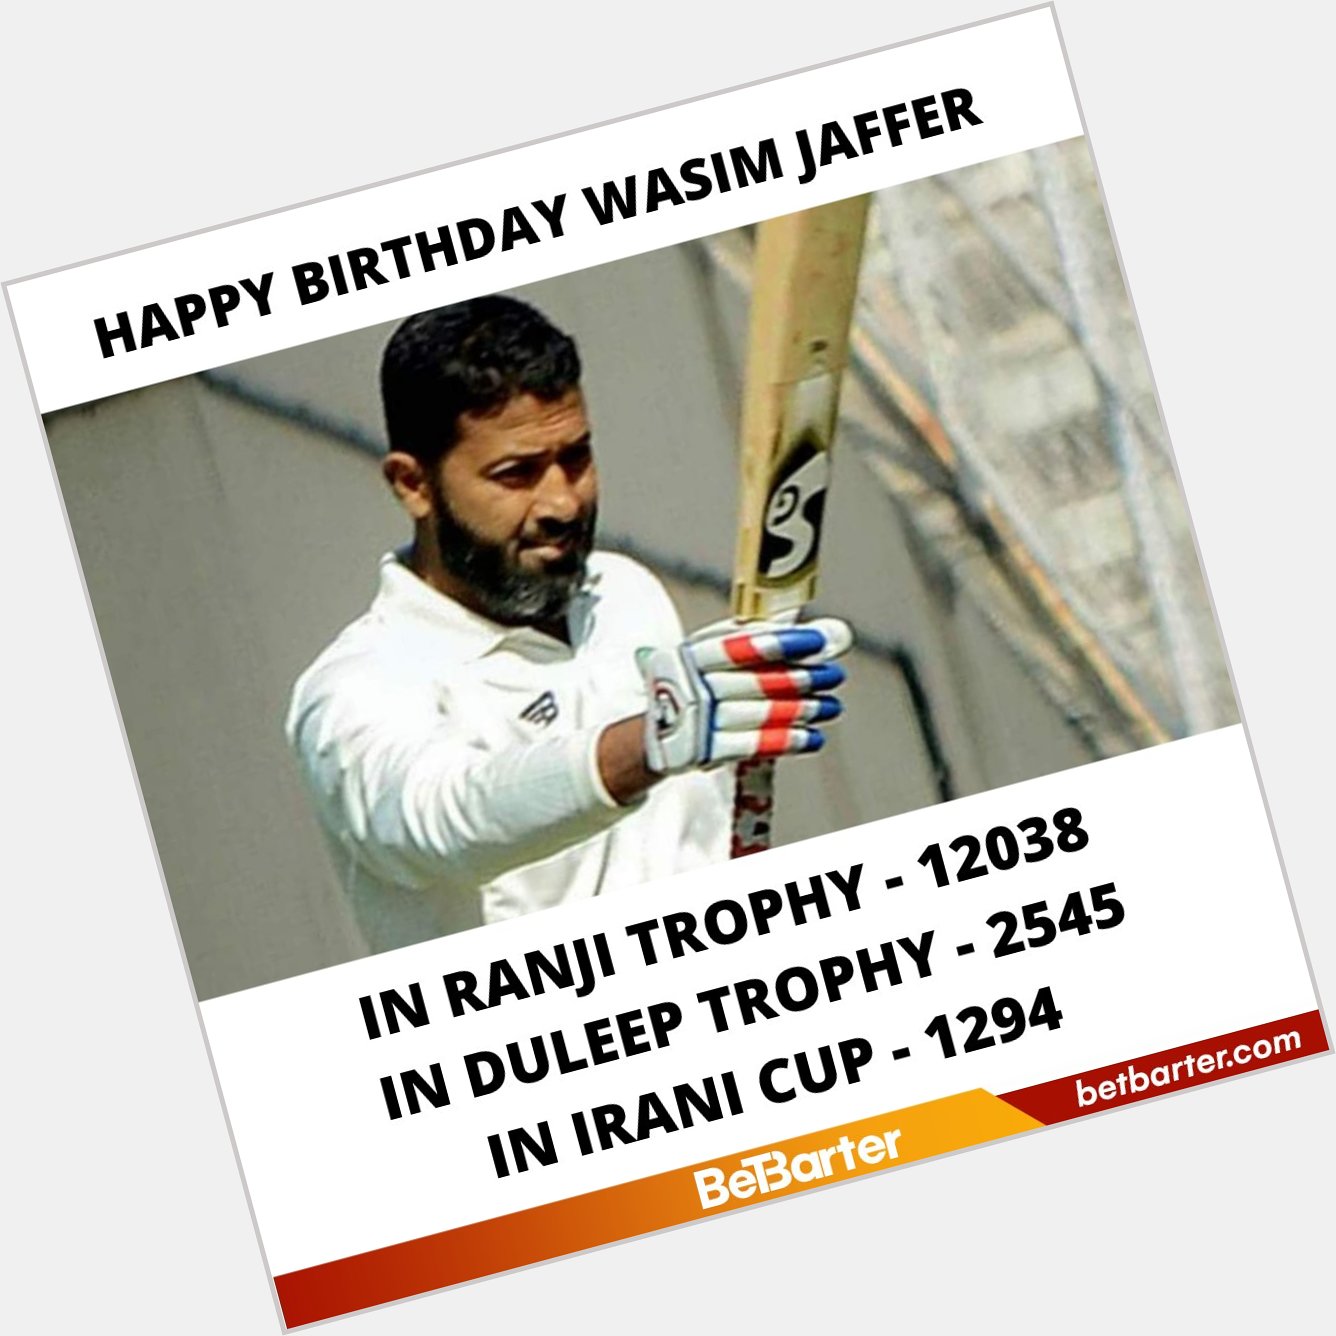 Happy Birthday to Wasim Jaffer !!  